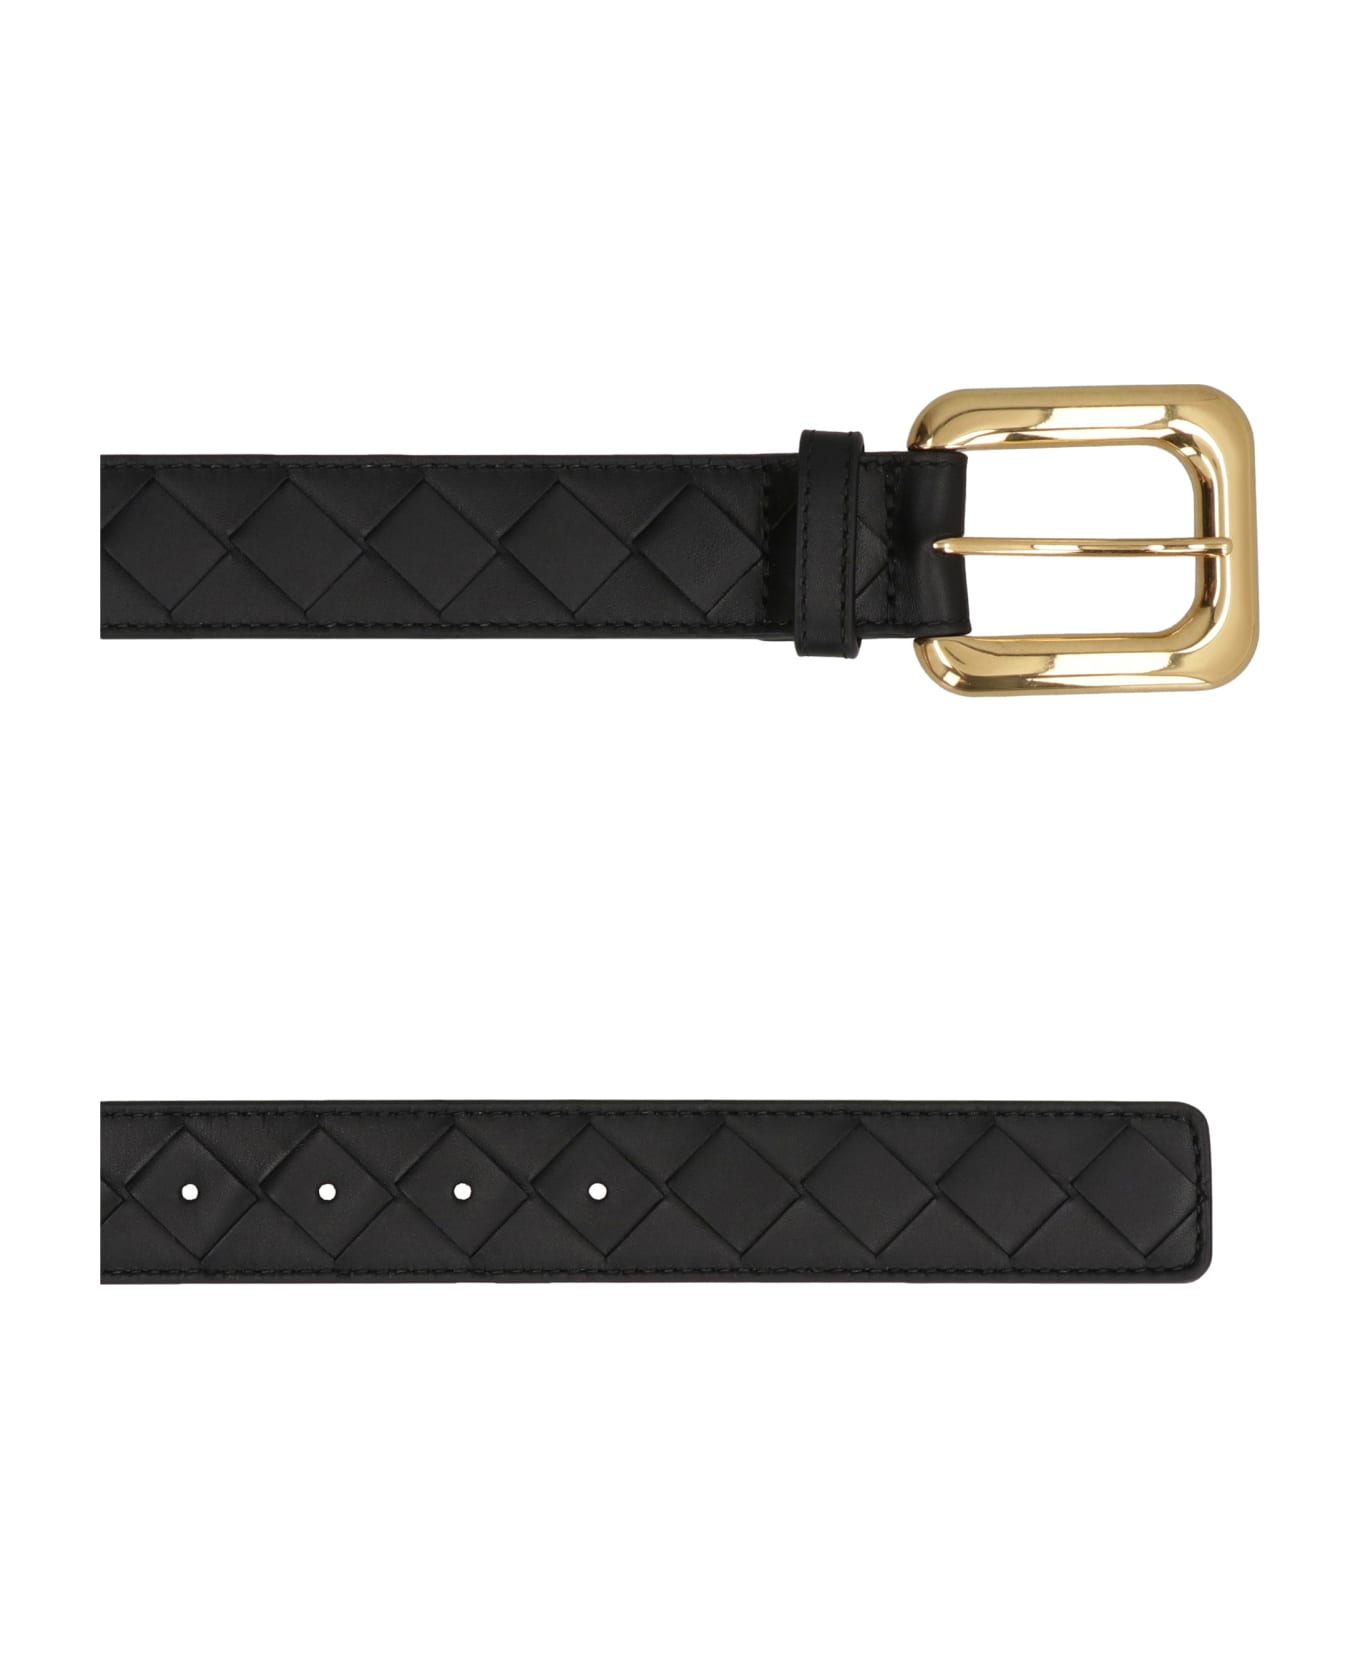 Bottega Veneta Leather Belt - black ベルト